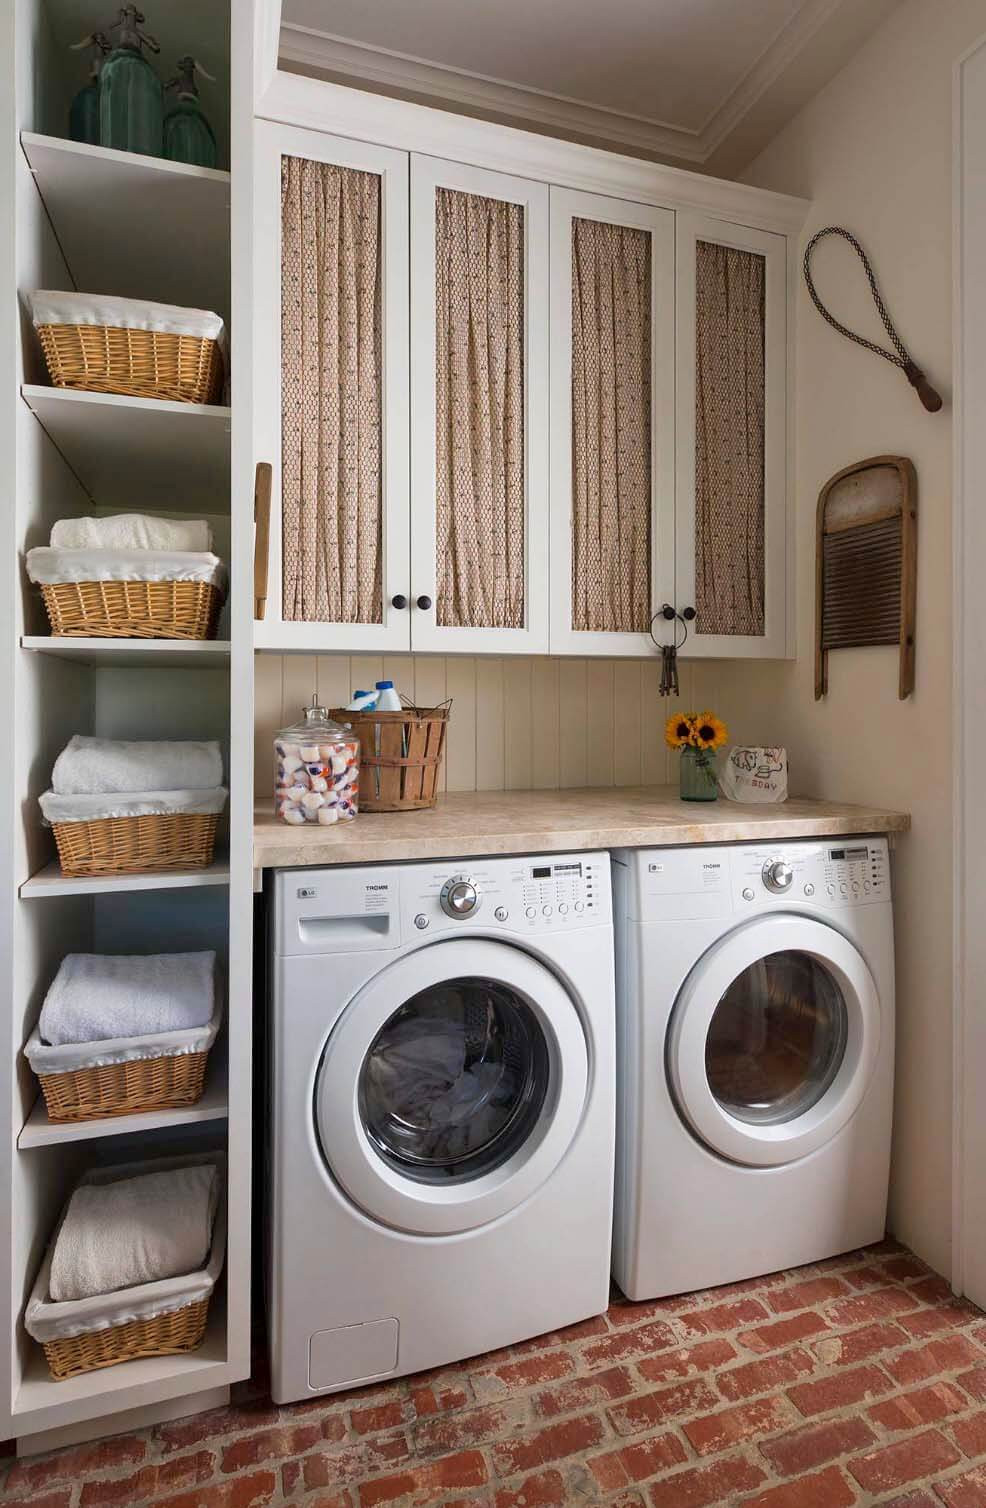 Best ideas about Laundry Room Design Ideas
. Save or Pin 28 Best Small Laundry Room Design Ideas for 2019 Now.